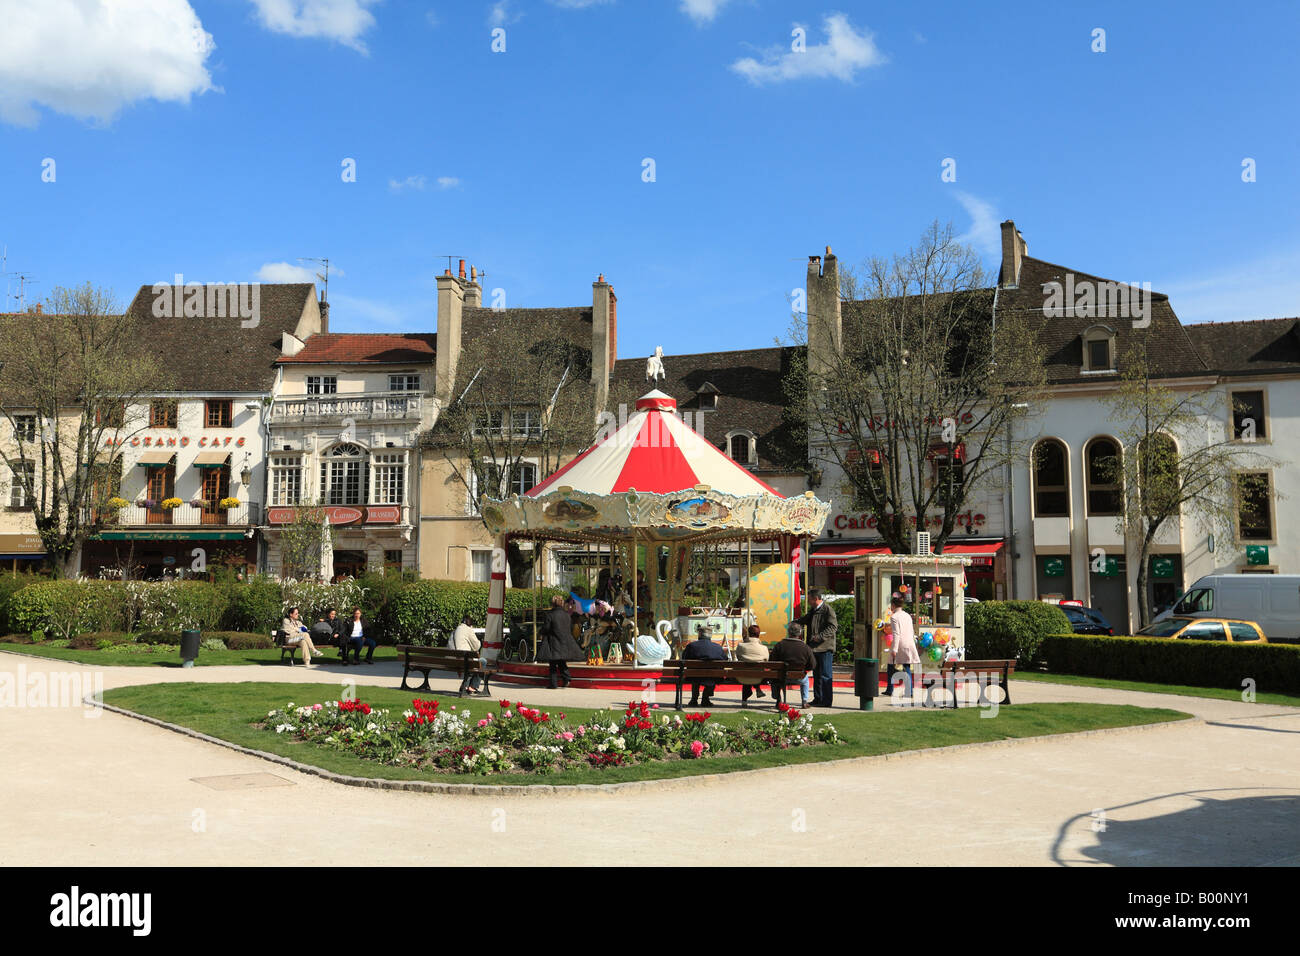 Fairground Carousel at Place Carnot, Beaune, Burgundy, France. Stock Photo